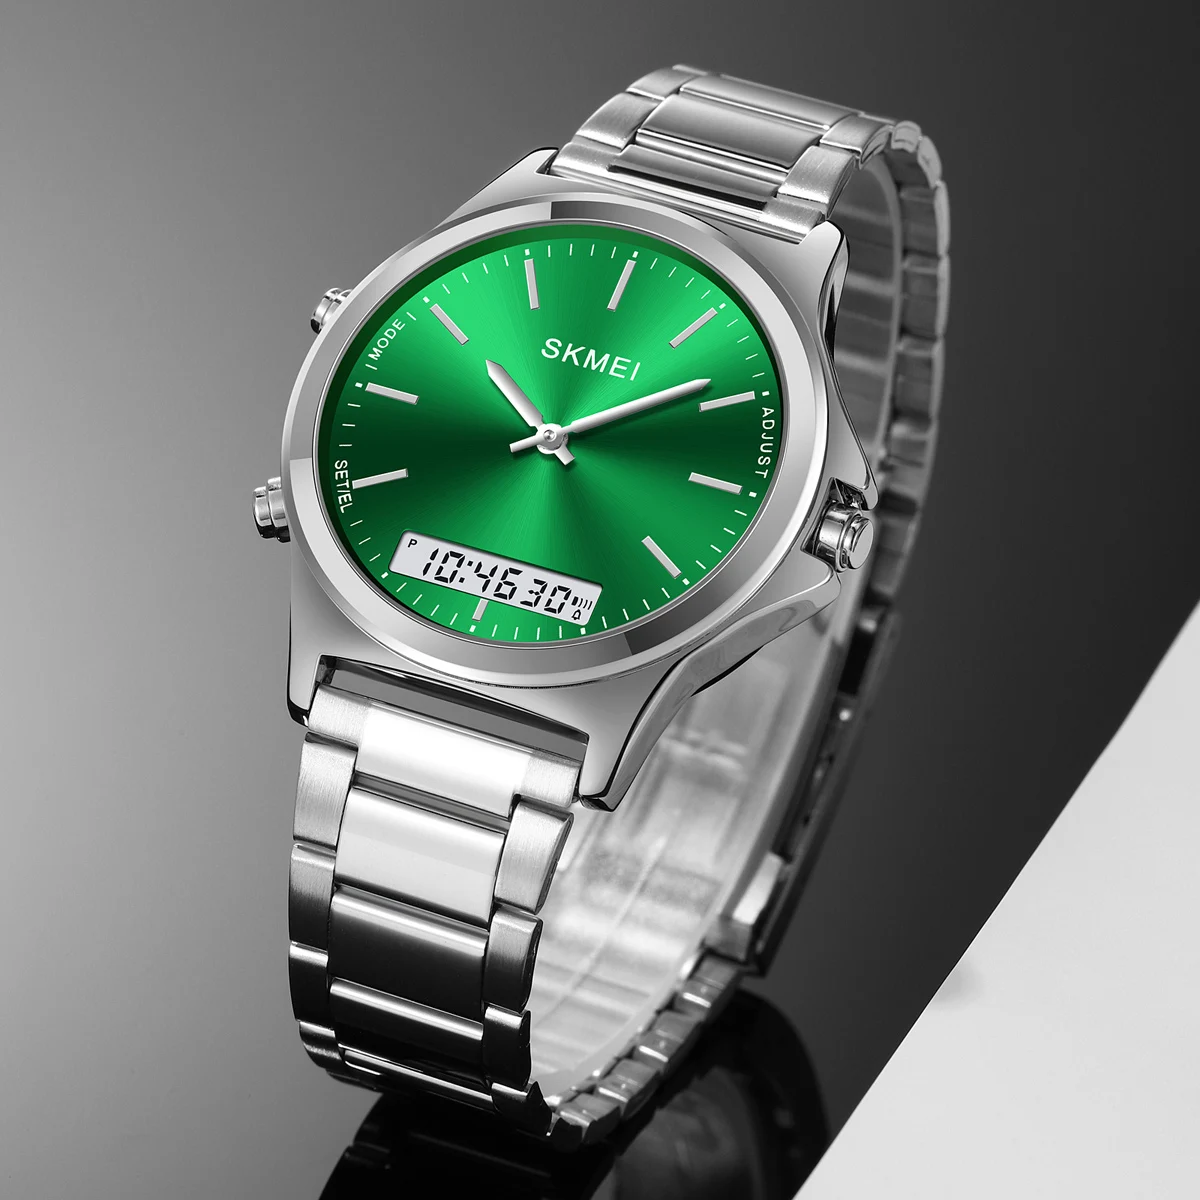 SKMEI Full Steel 3 Time Back Light Display Digital Chrono Sport Watches Mens Waterproof Alarm Wristwatches Clock reloj hombre